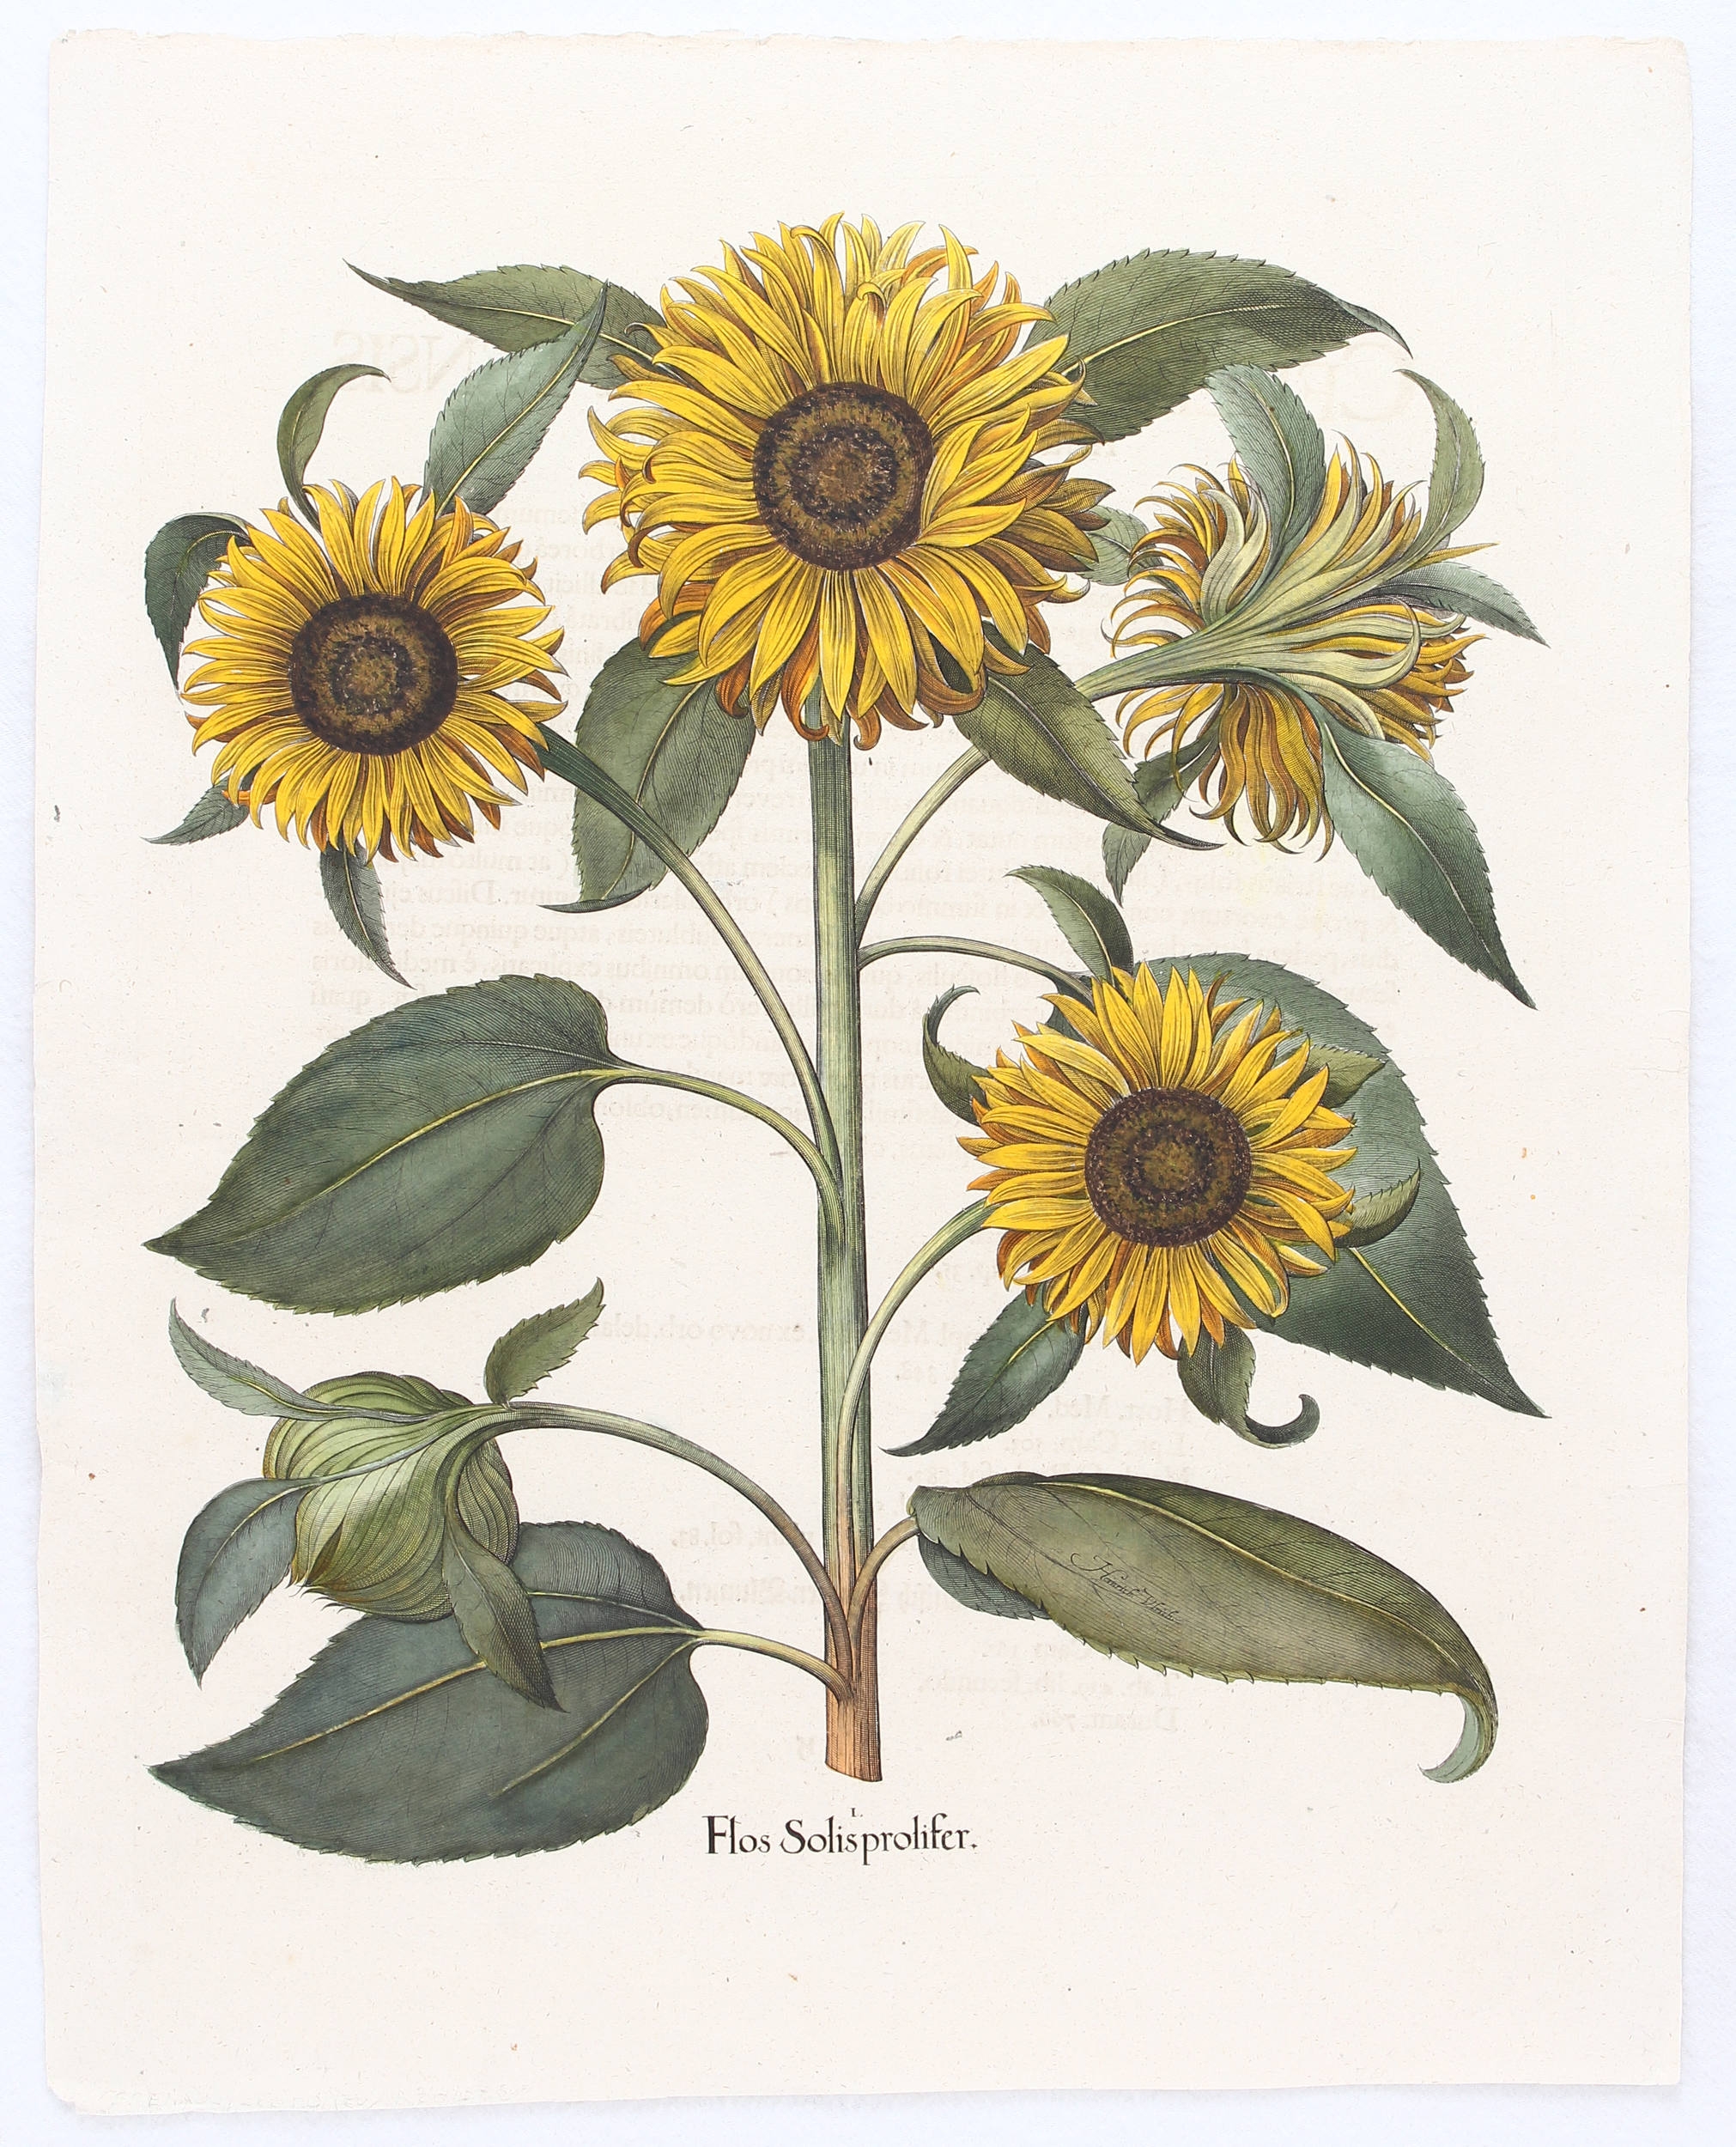 Flos Solis prolifer (vielblütige Sonnenblume) by Basilius Besler